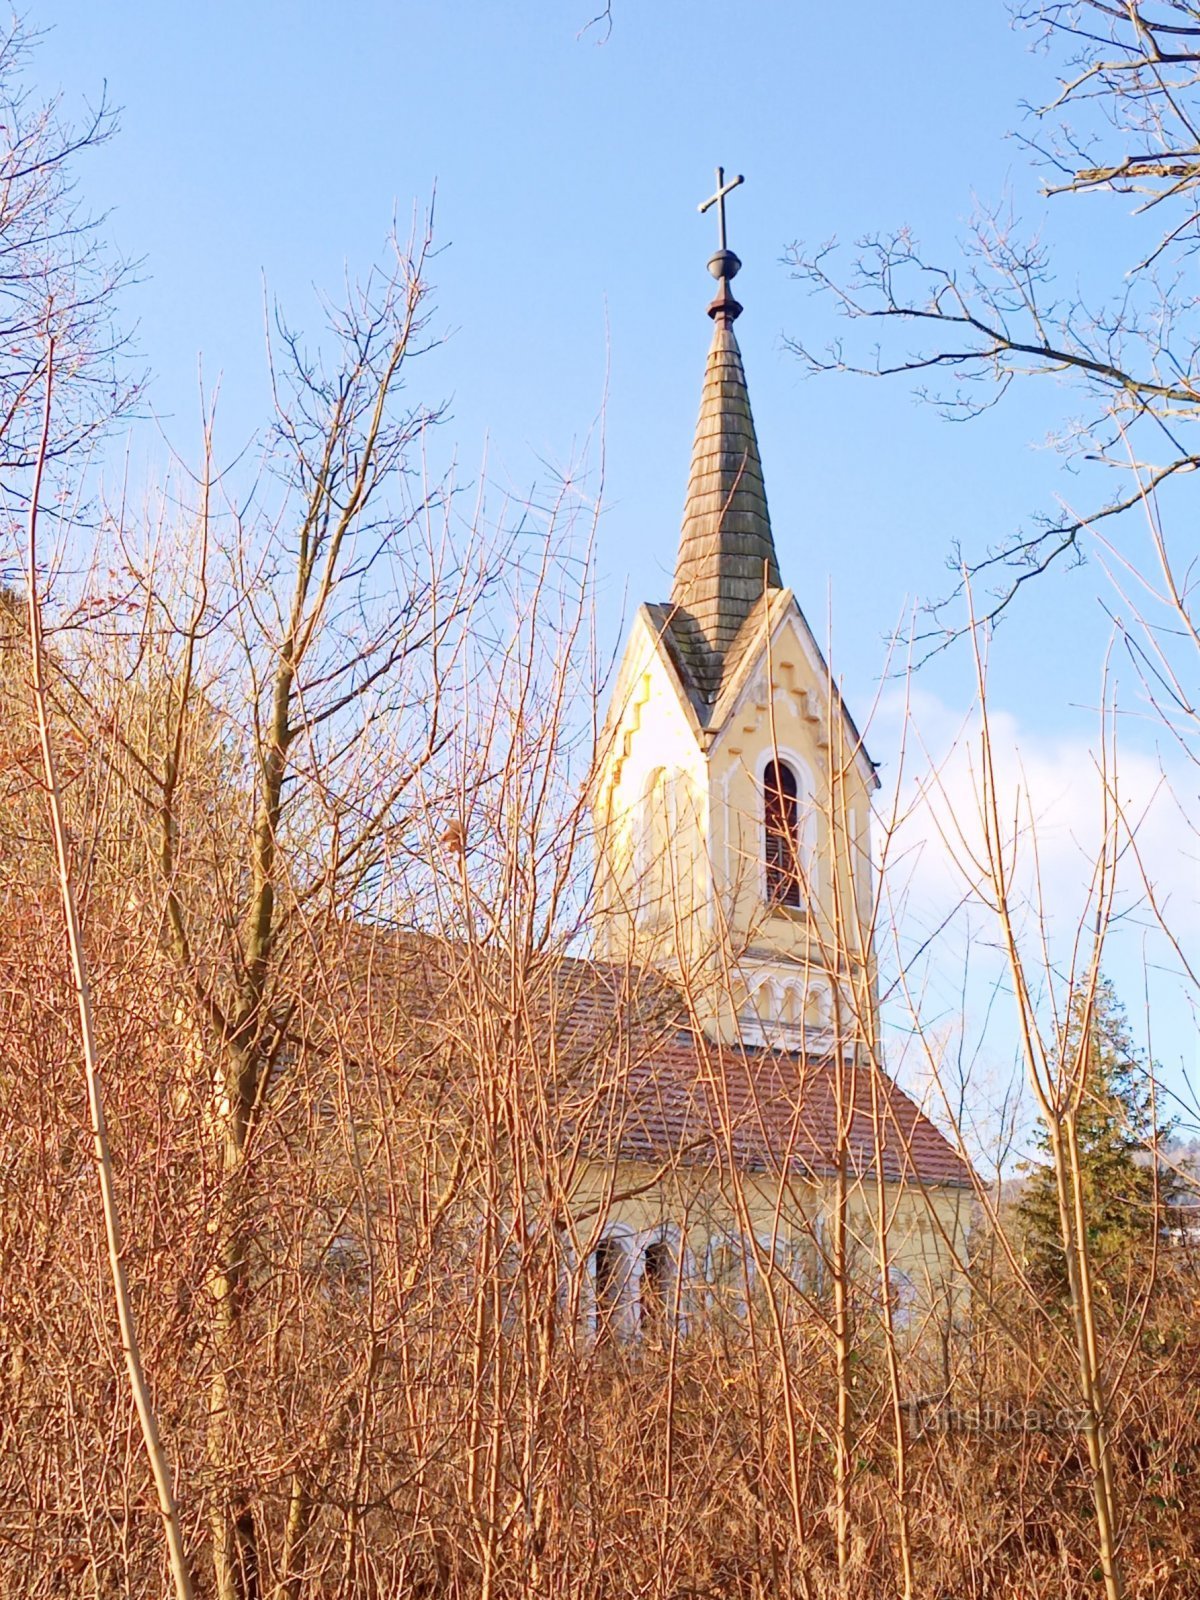 2. Jetřichovice 附近的悲伤圣母教堂很快就会消失在灌木丛中